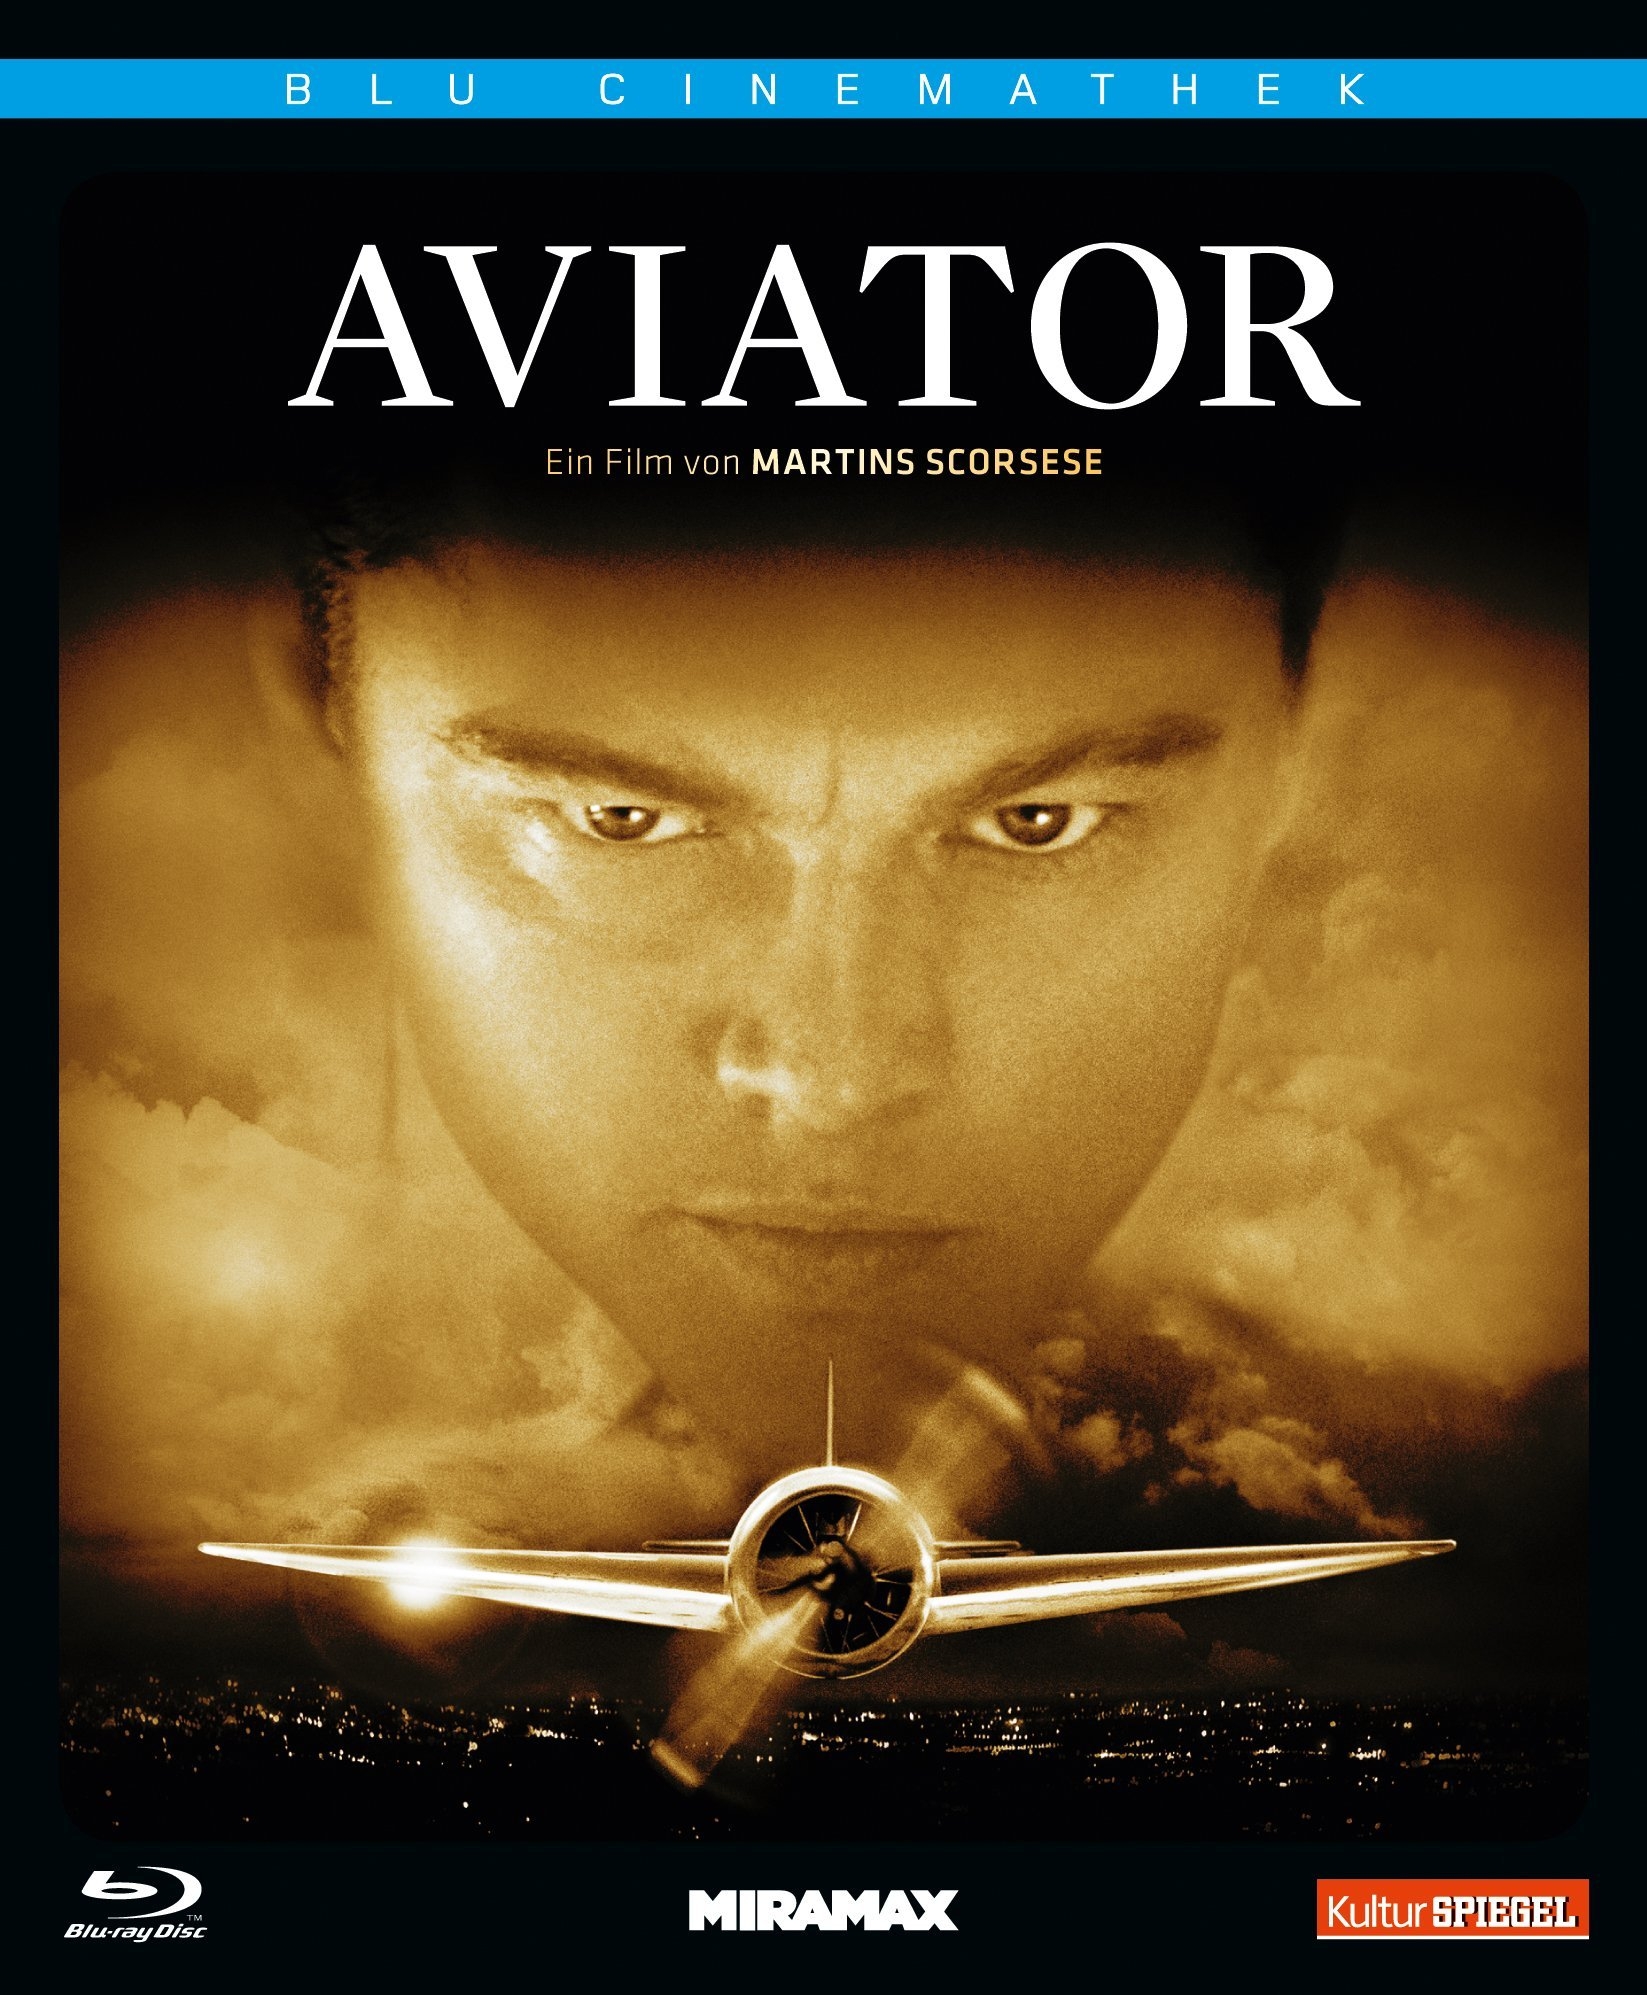 [飞行家].The.Aviator.2004.GER.BluRay.1080p.AVC.DTS-HD.MA.5.1-blucook@CHDBits    45.65G-1.jpg